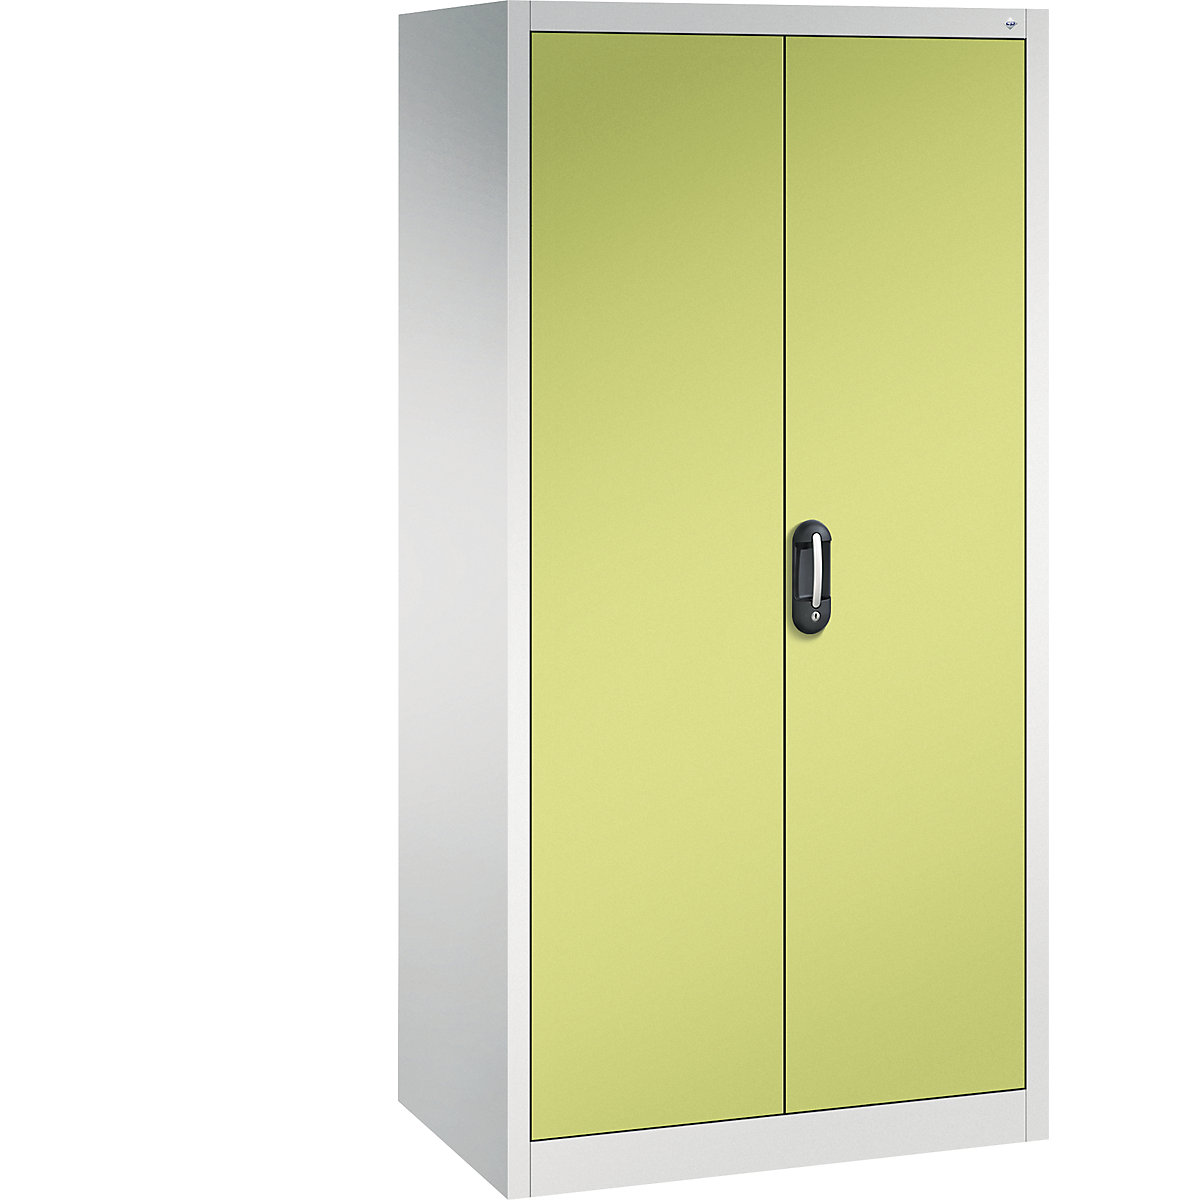 ACURADO universal cupboard – C+P, WxD 930 x 600 mm, light grey / viridian green-27